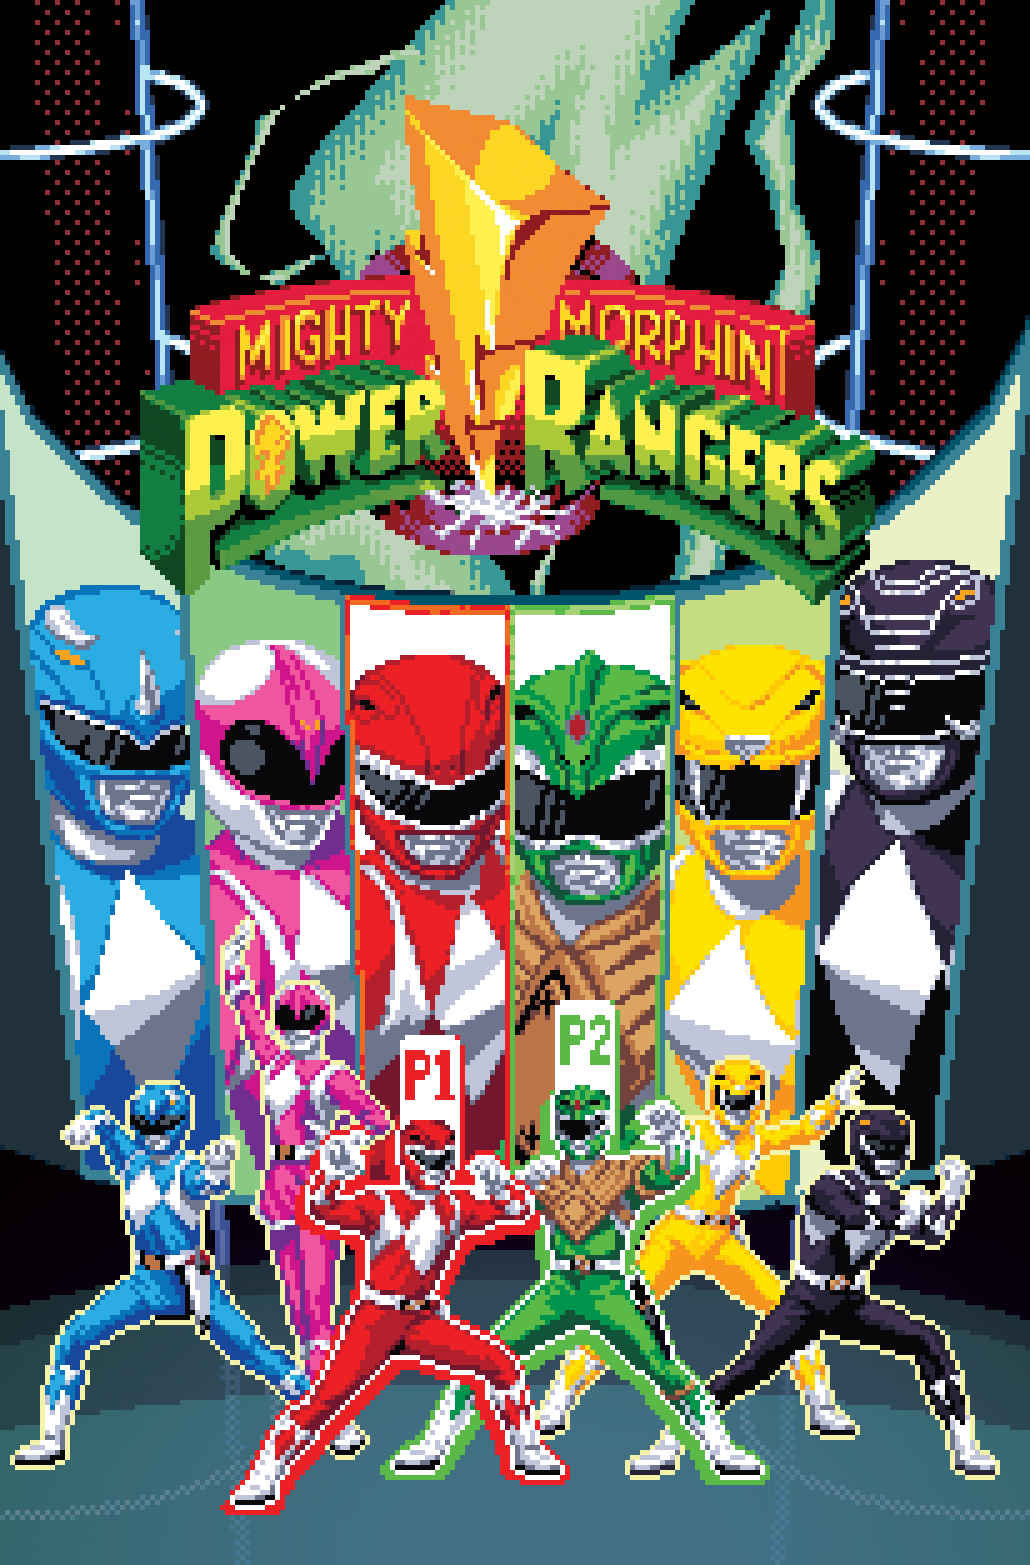 Pixel art pixelart pixel Power Rangers Super Sentai tokusatsu comics Cover Art 8bit 16bit